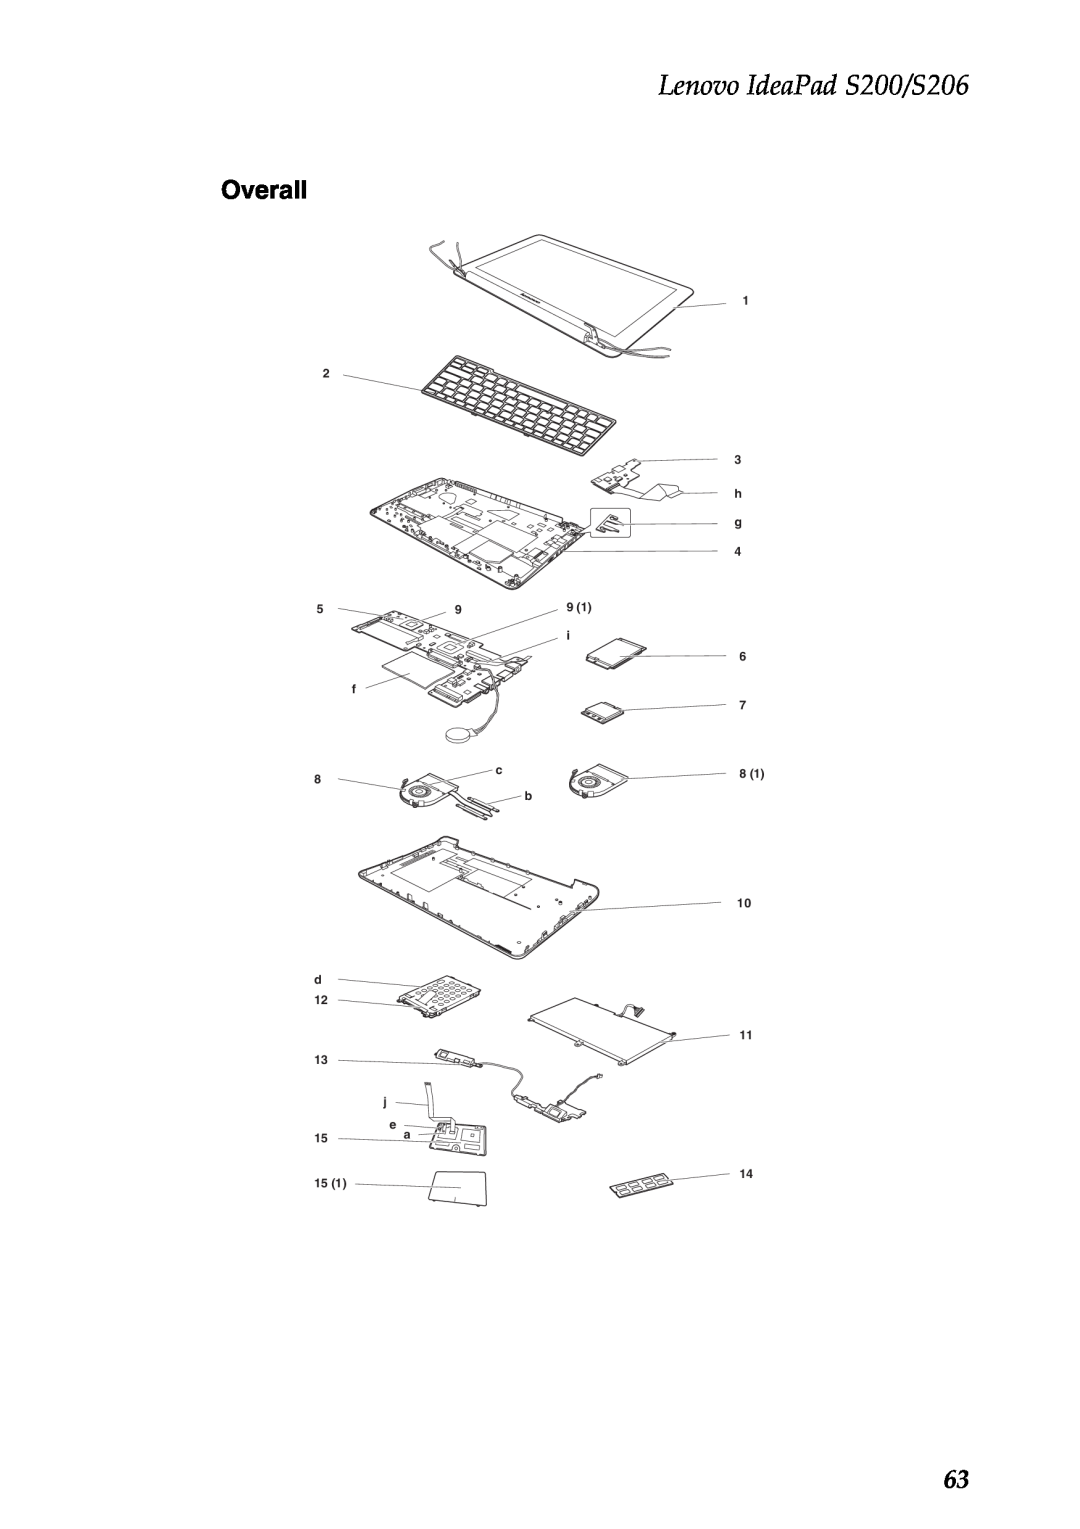 Lenovo manual Overall, Lenovo IdeaPad S200/S206, i f c 8 b d 13 j e 15a, 1 3 h g 6 7 8 